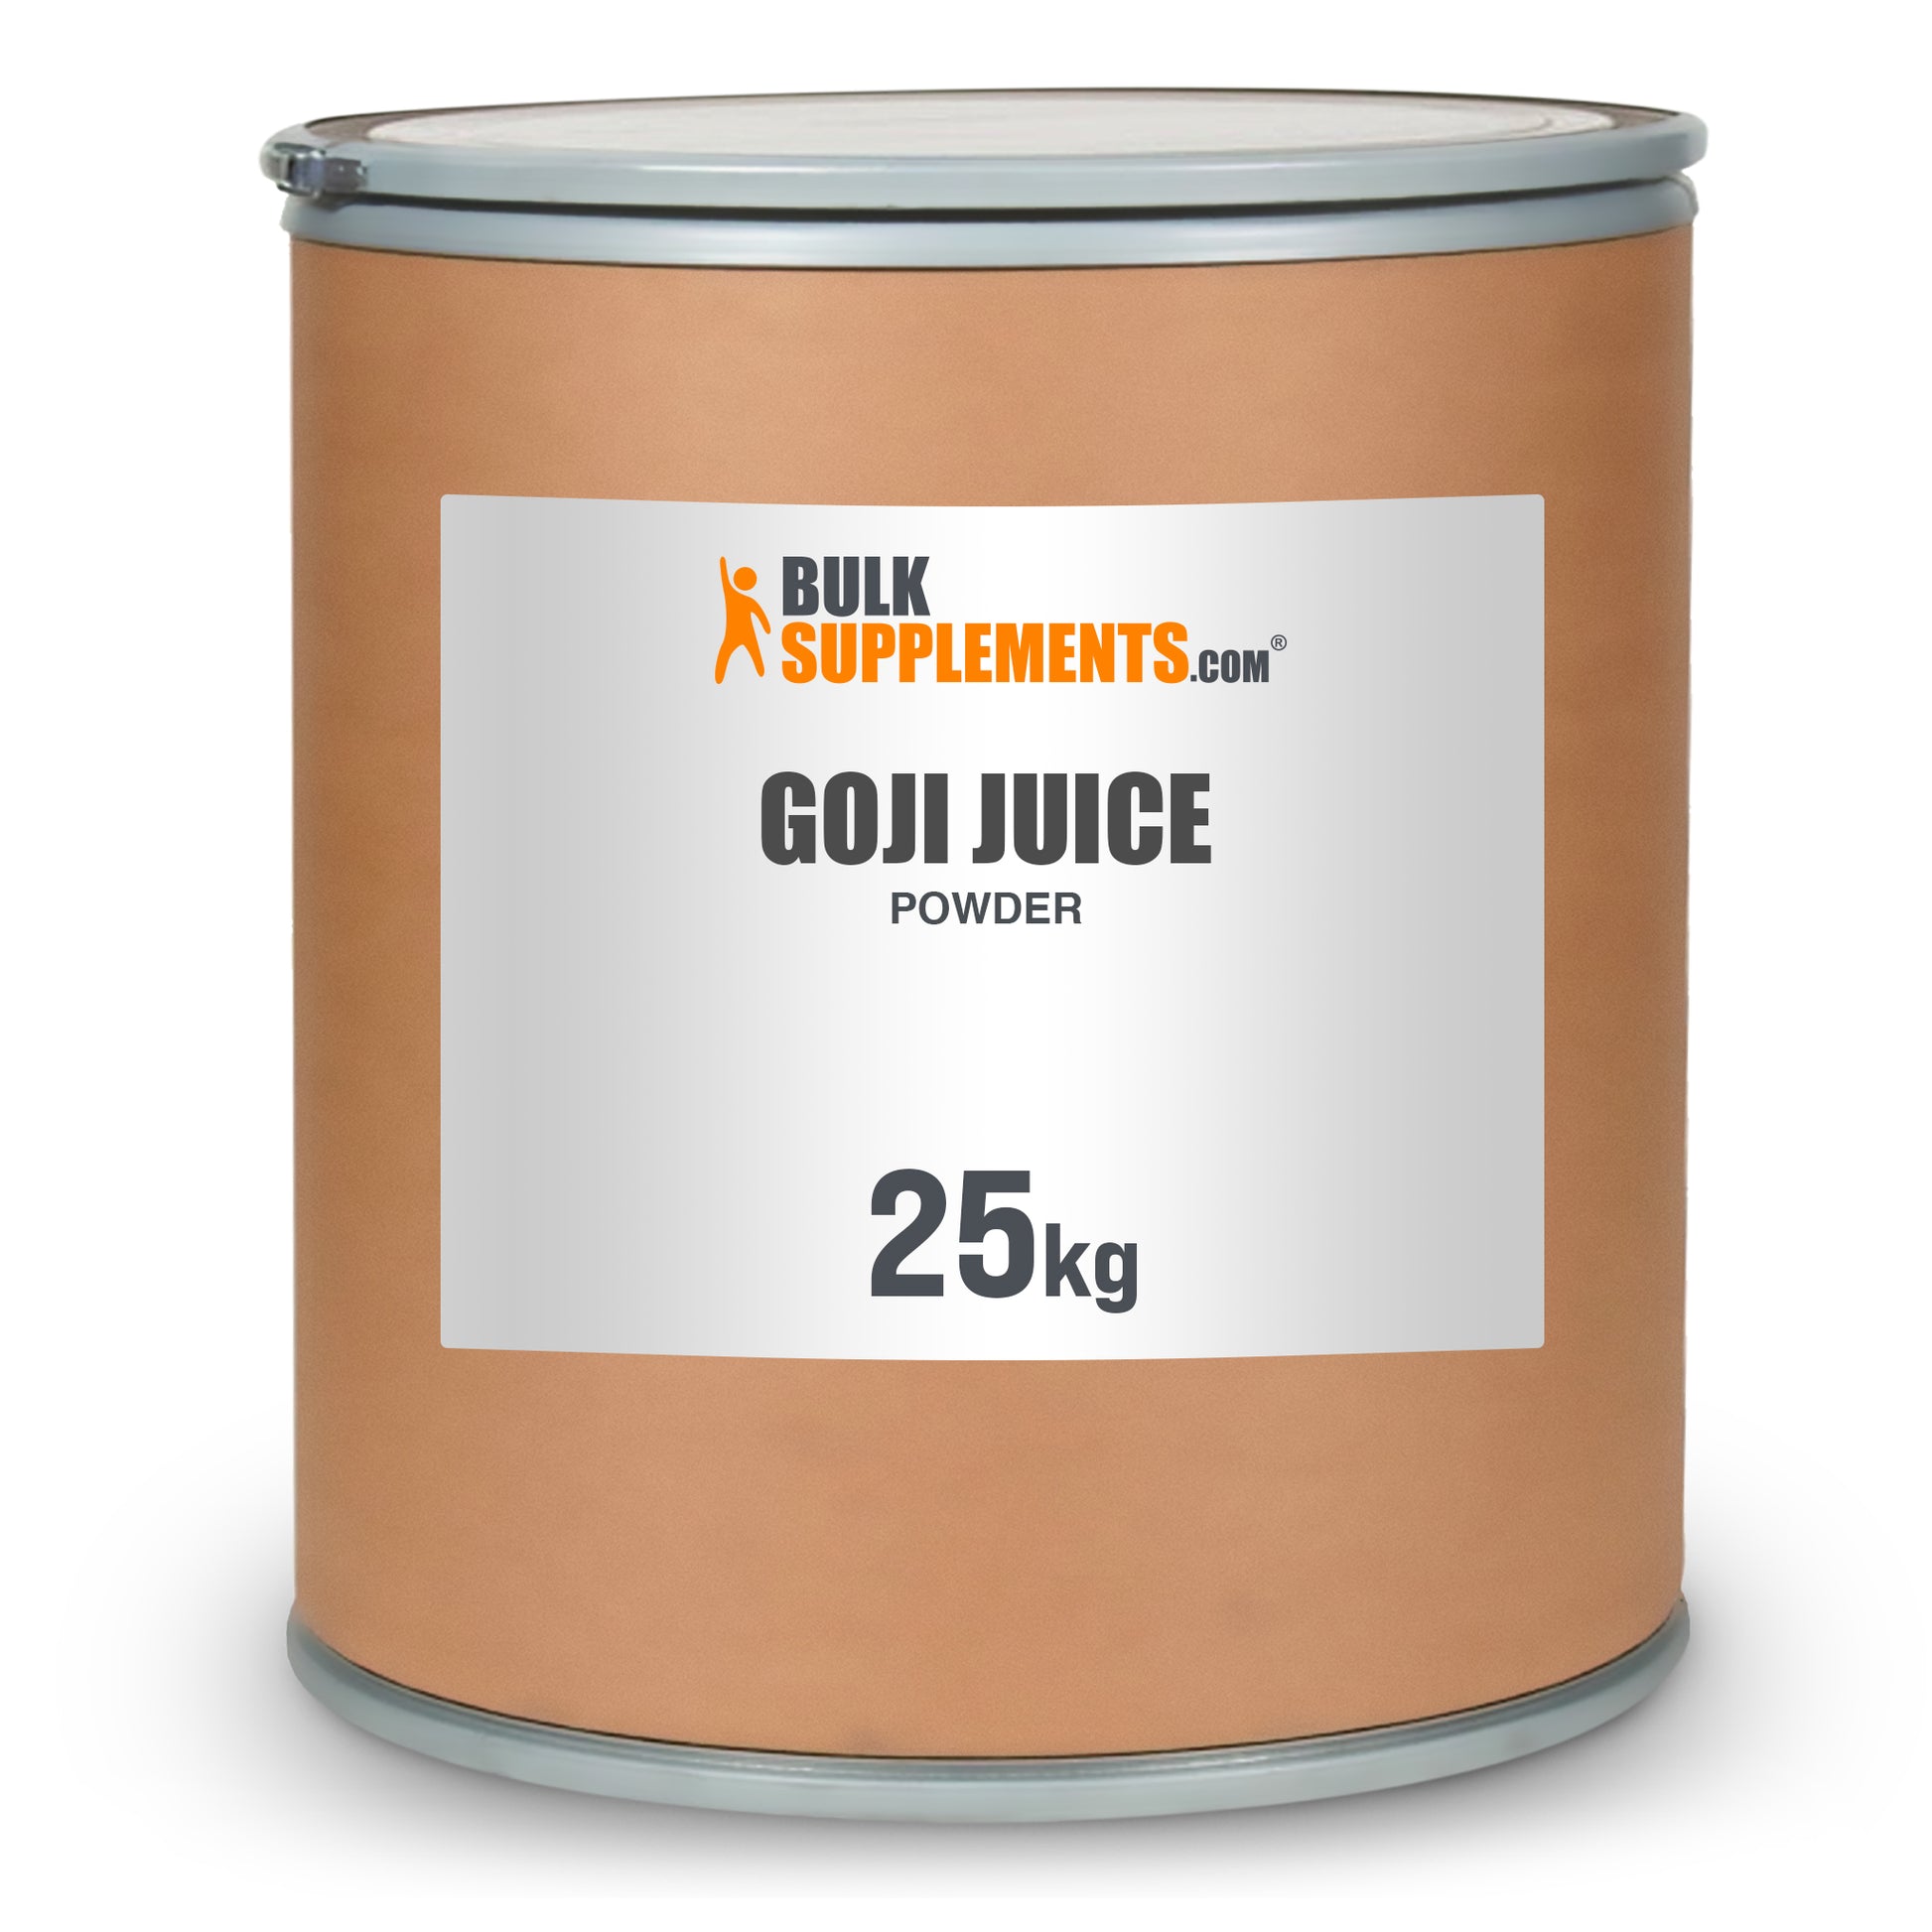 Goji Juice Powder 25kg barrel image